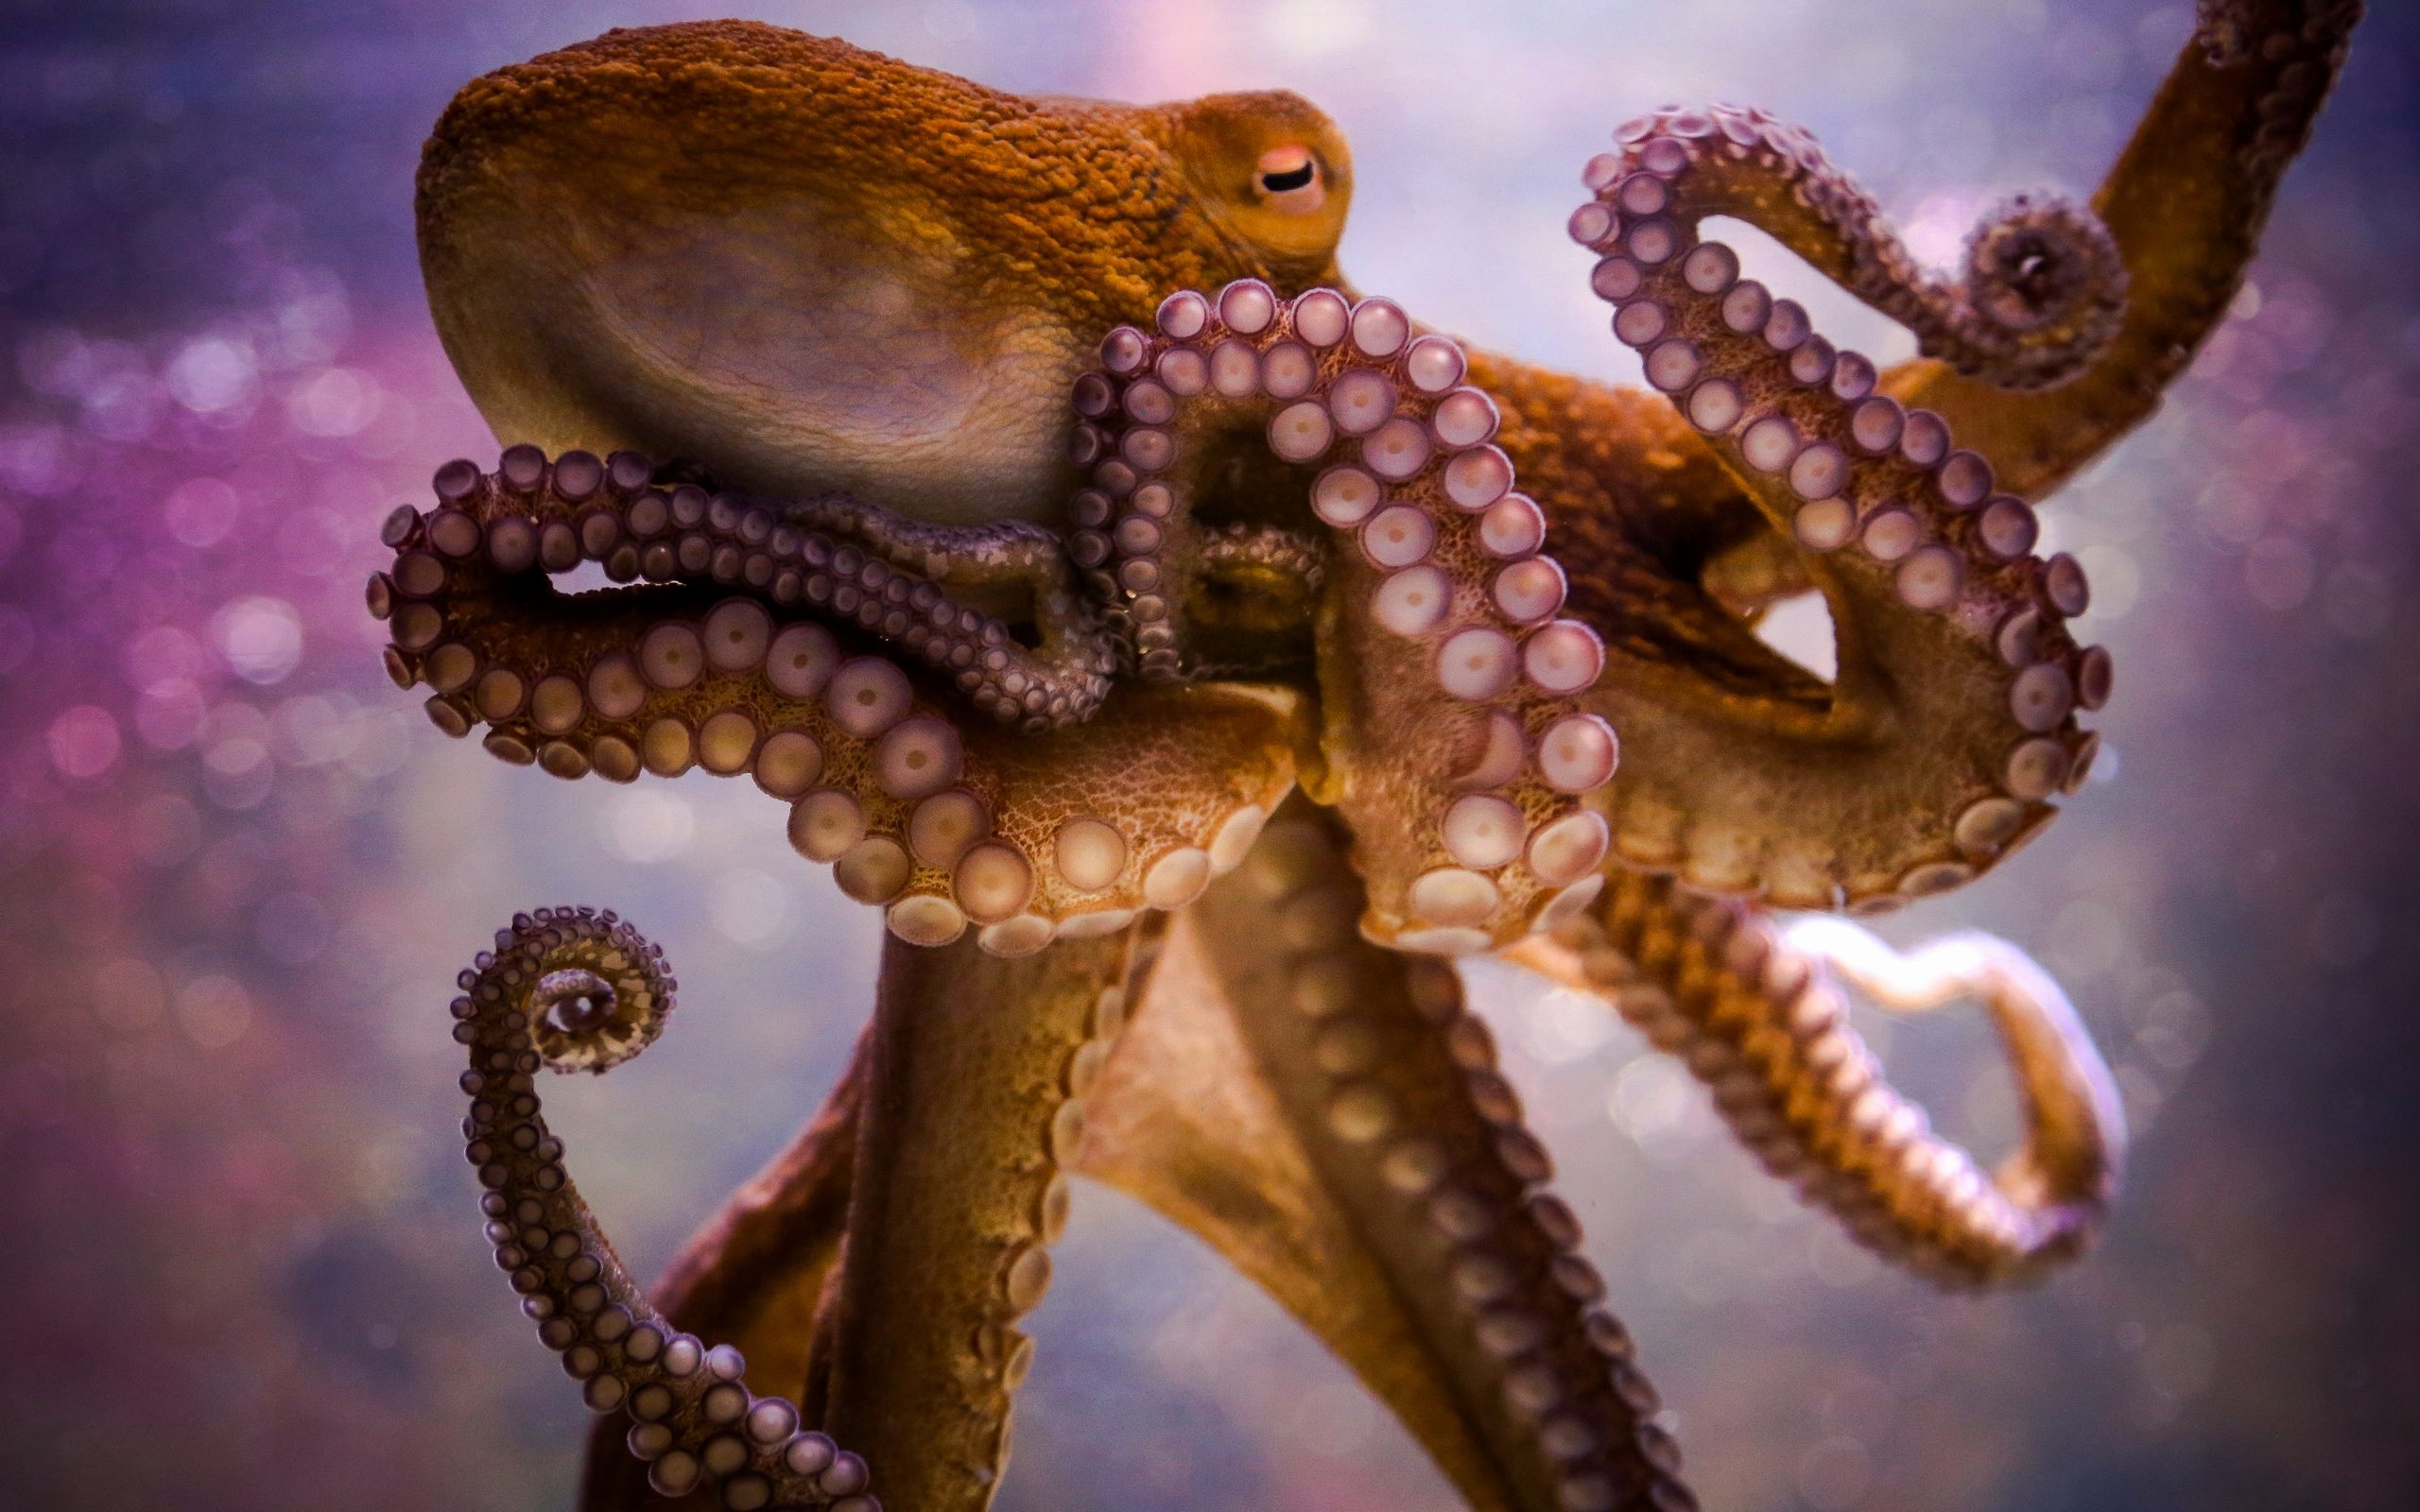 Tentacles in HD, Desktop wallpaper download, Stunning cephalopod image, Blue ring octopus, 2560x1600 HD Desktop